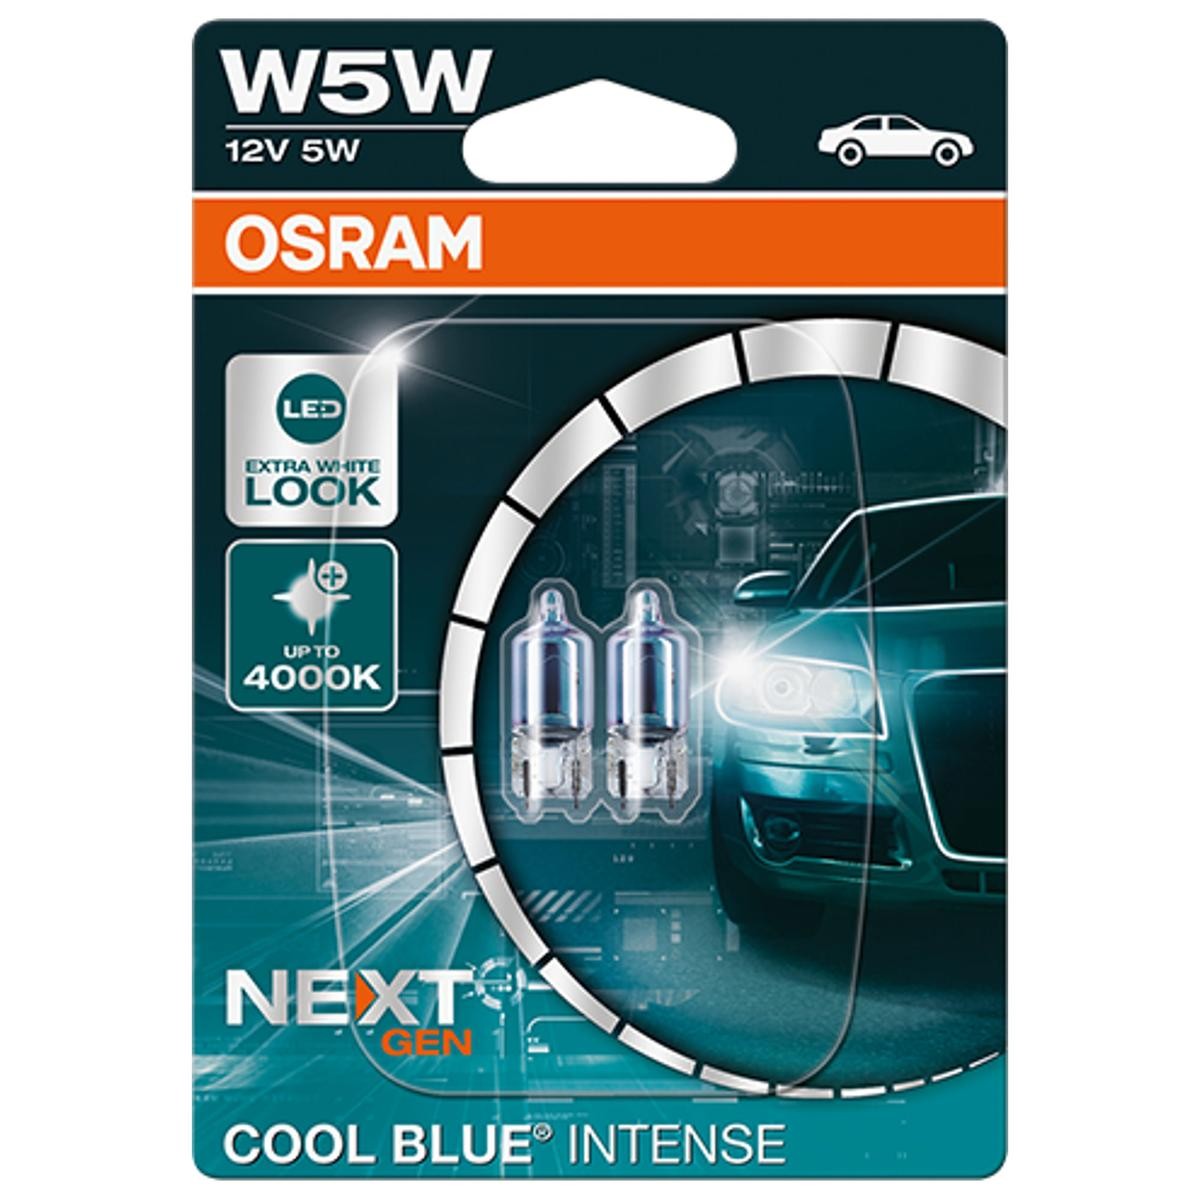 2825CBN-02B OSRAM COOL BLUE INTENSE next Generation W5W Blinkerbirne 12V  5W, W5W